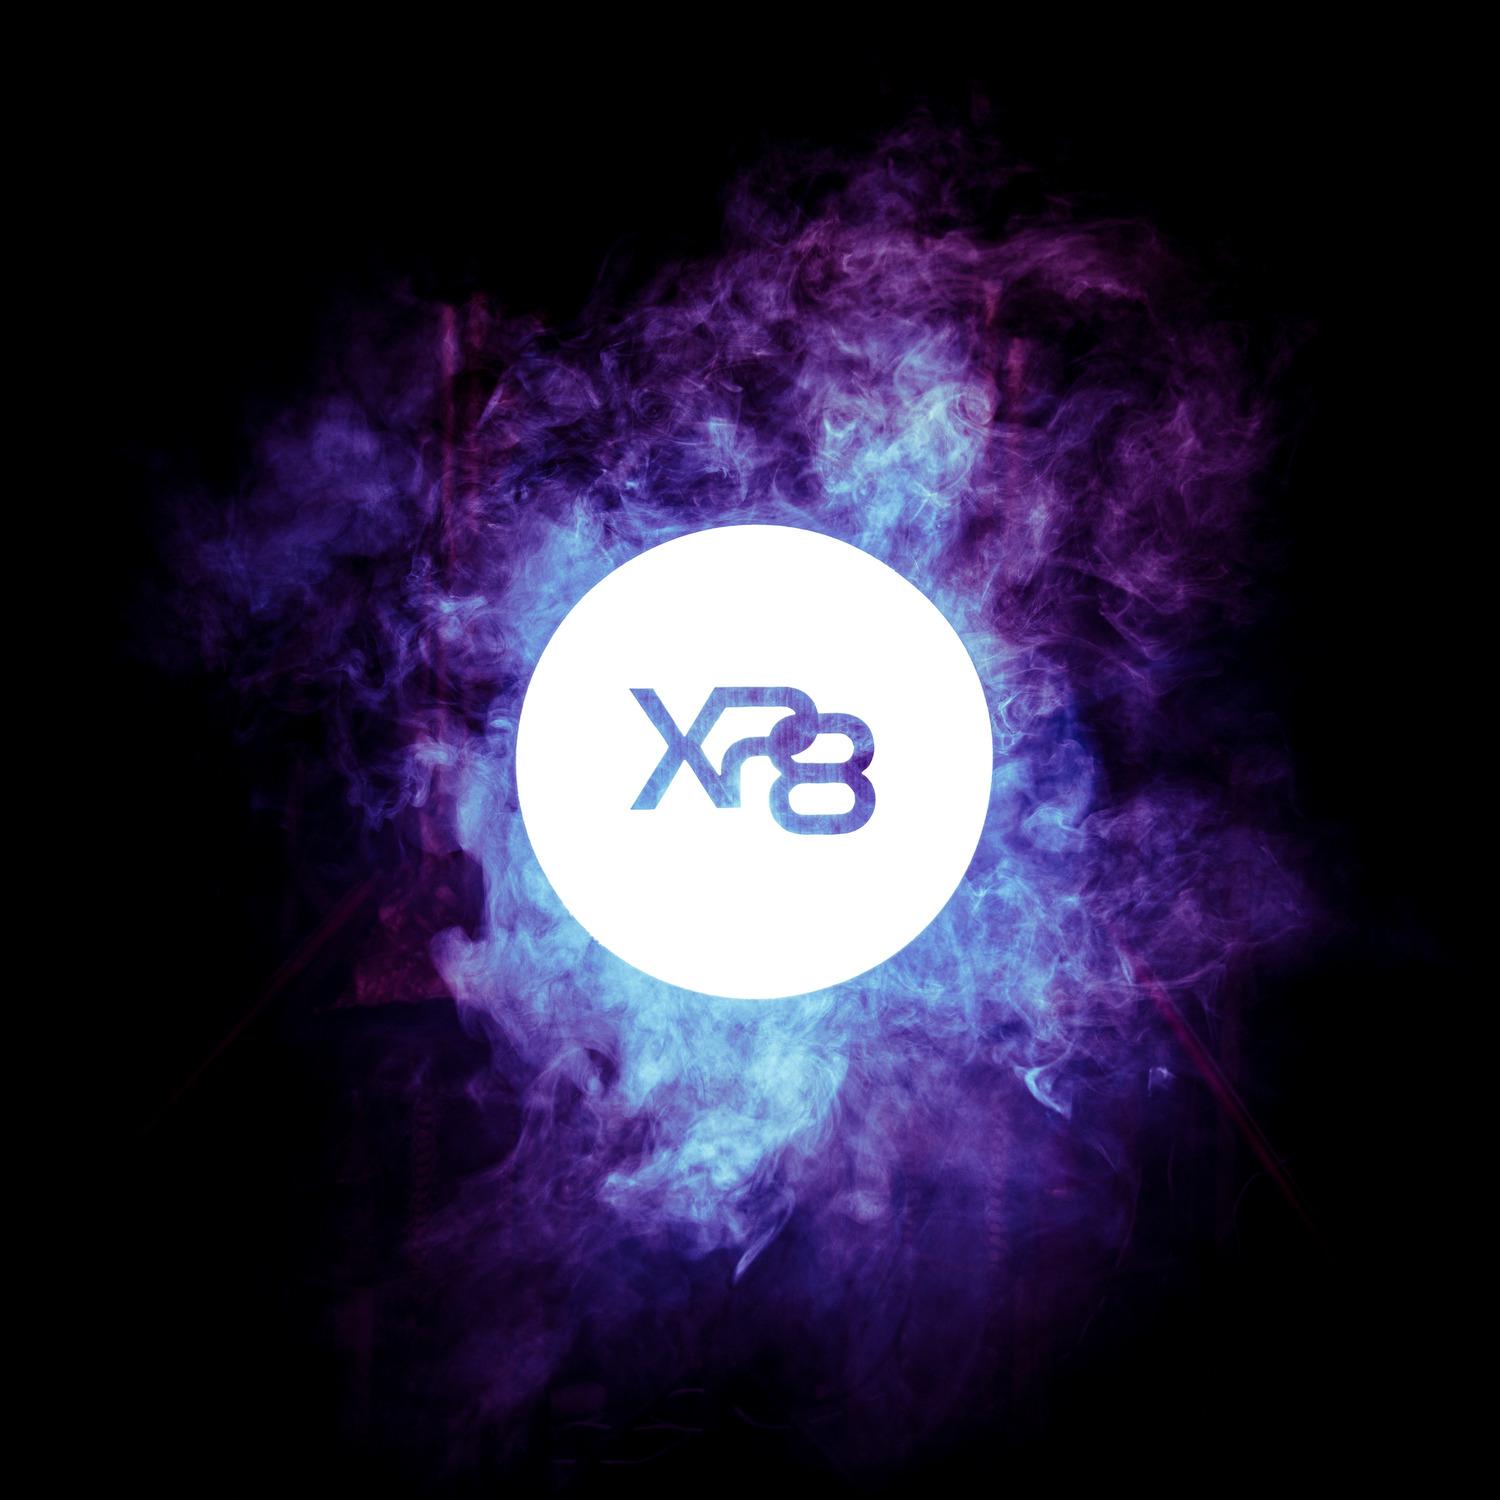 XP8 - Nightlife